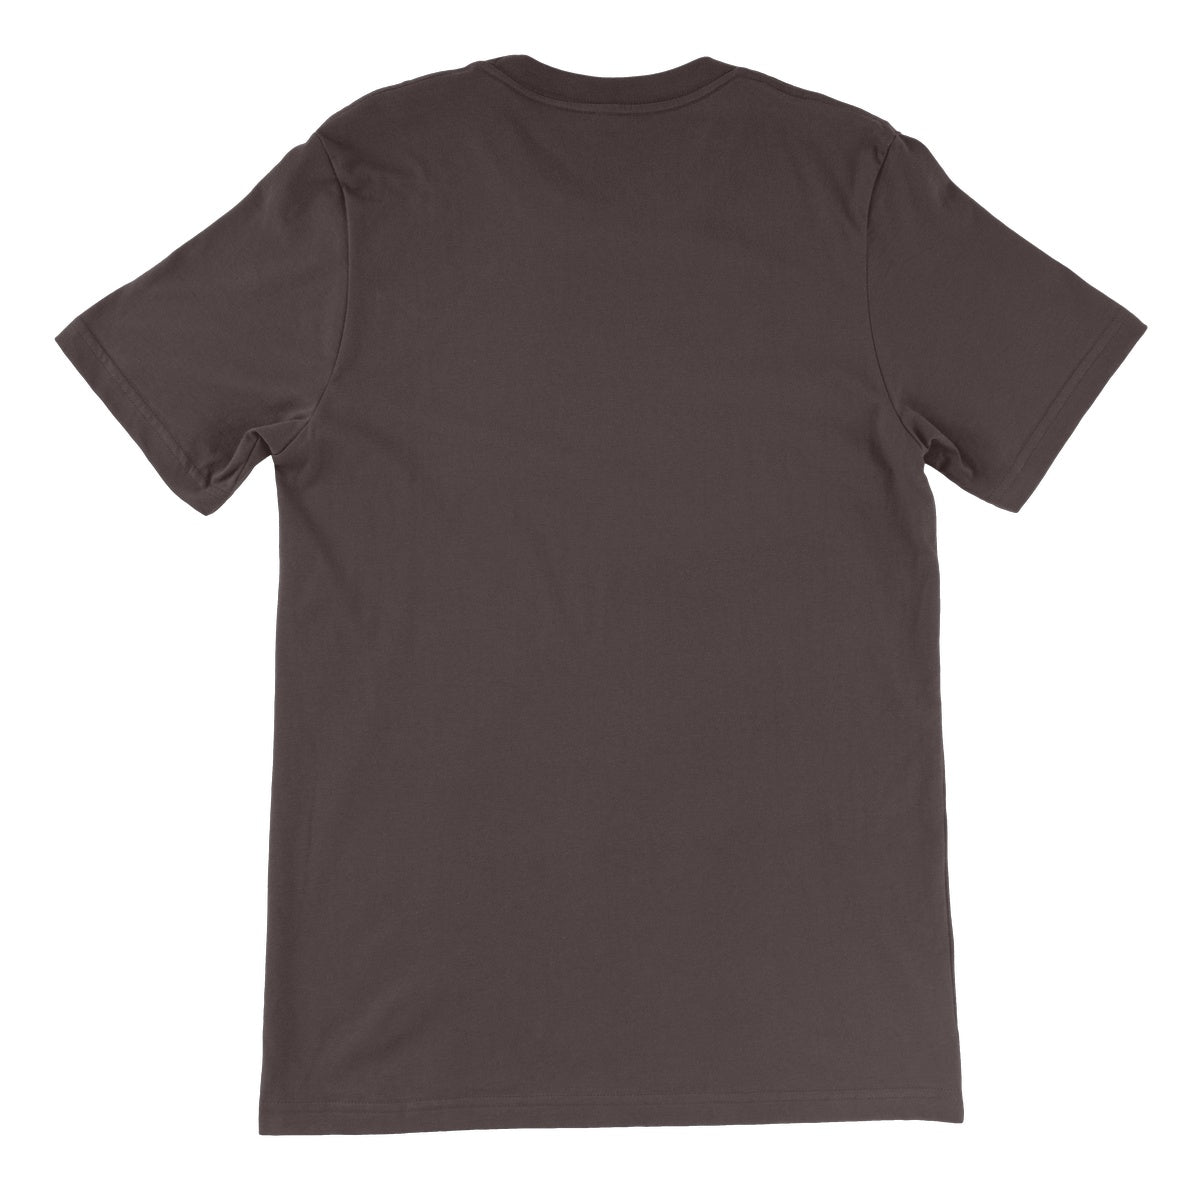 Möbius Flow, Dawn Globe Unisex Short Sleeve T-Shirt